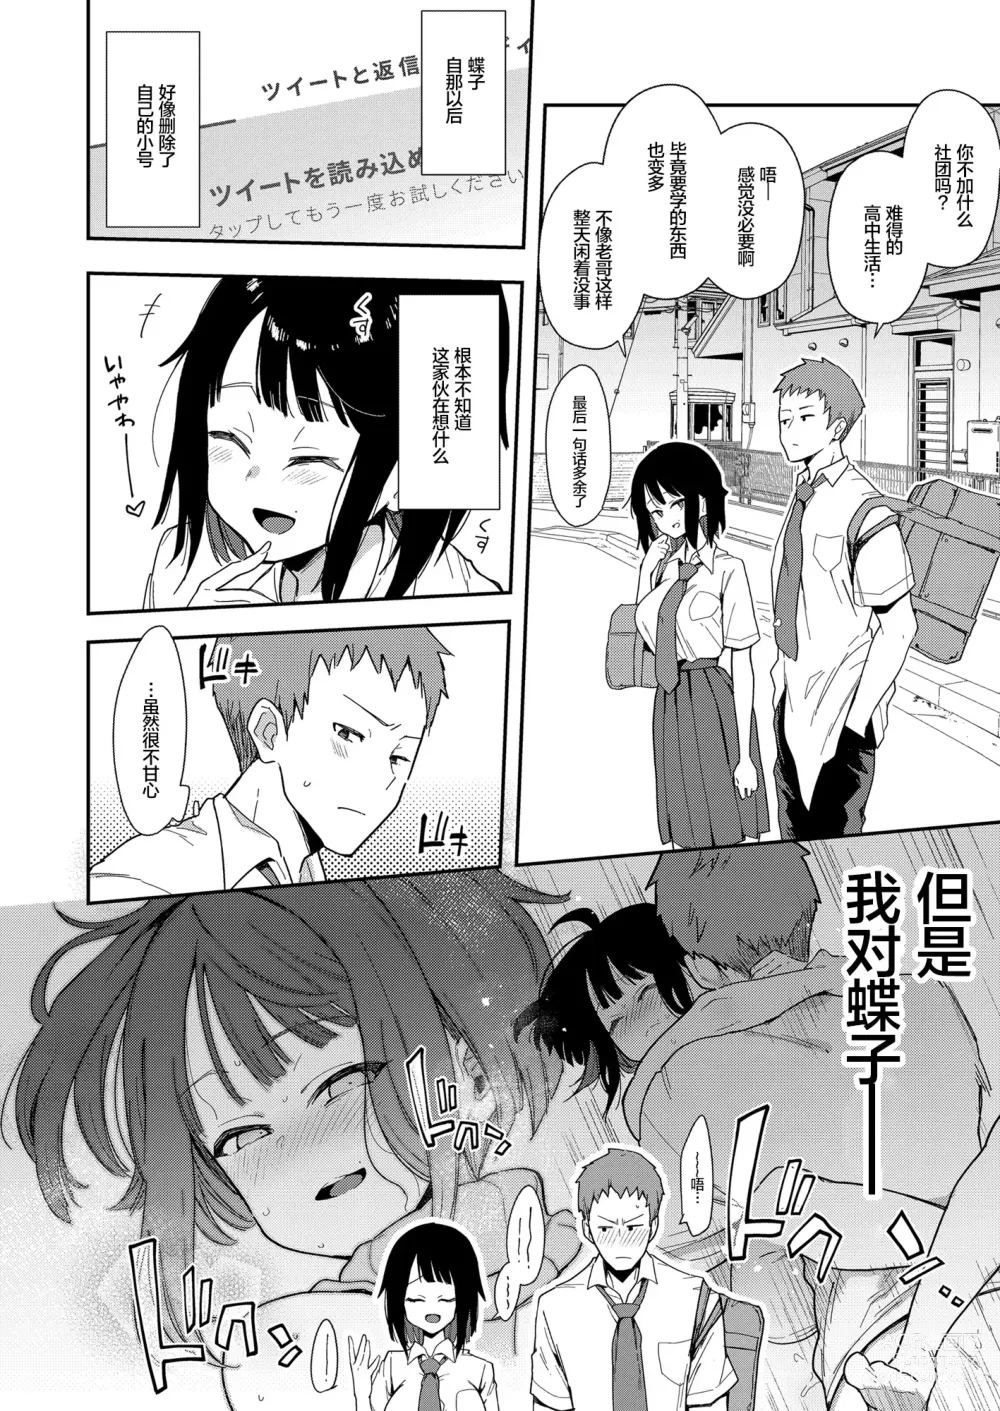 Page 6 of doujinshi 蝶子 III -悪友以上恋人未満の幼馴染が知らないところでヤリチンにハメられ性倫理を完全破壊されるまで-